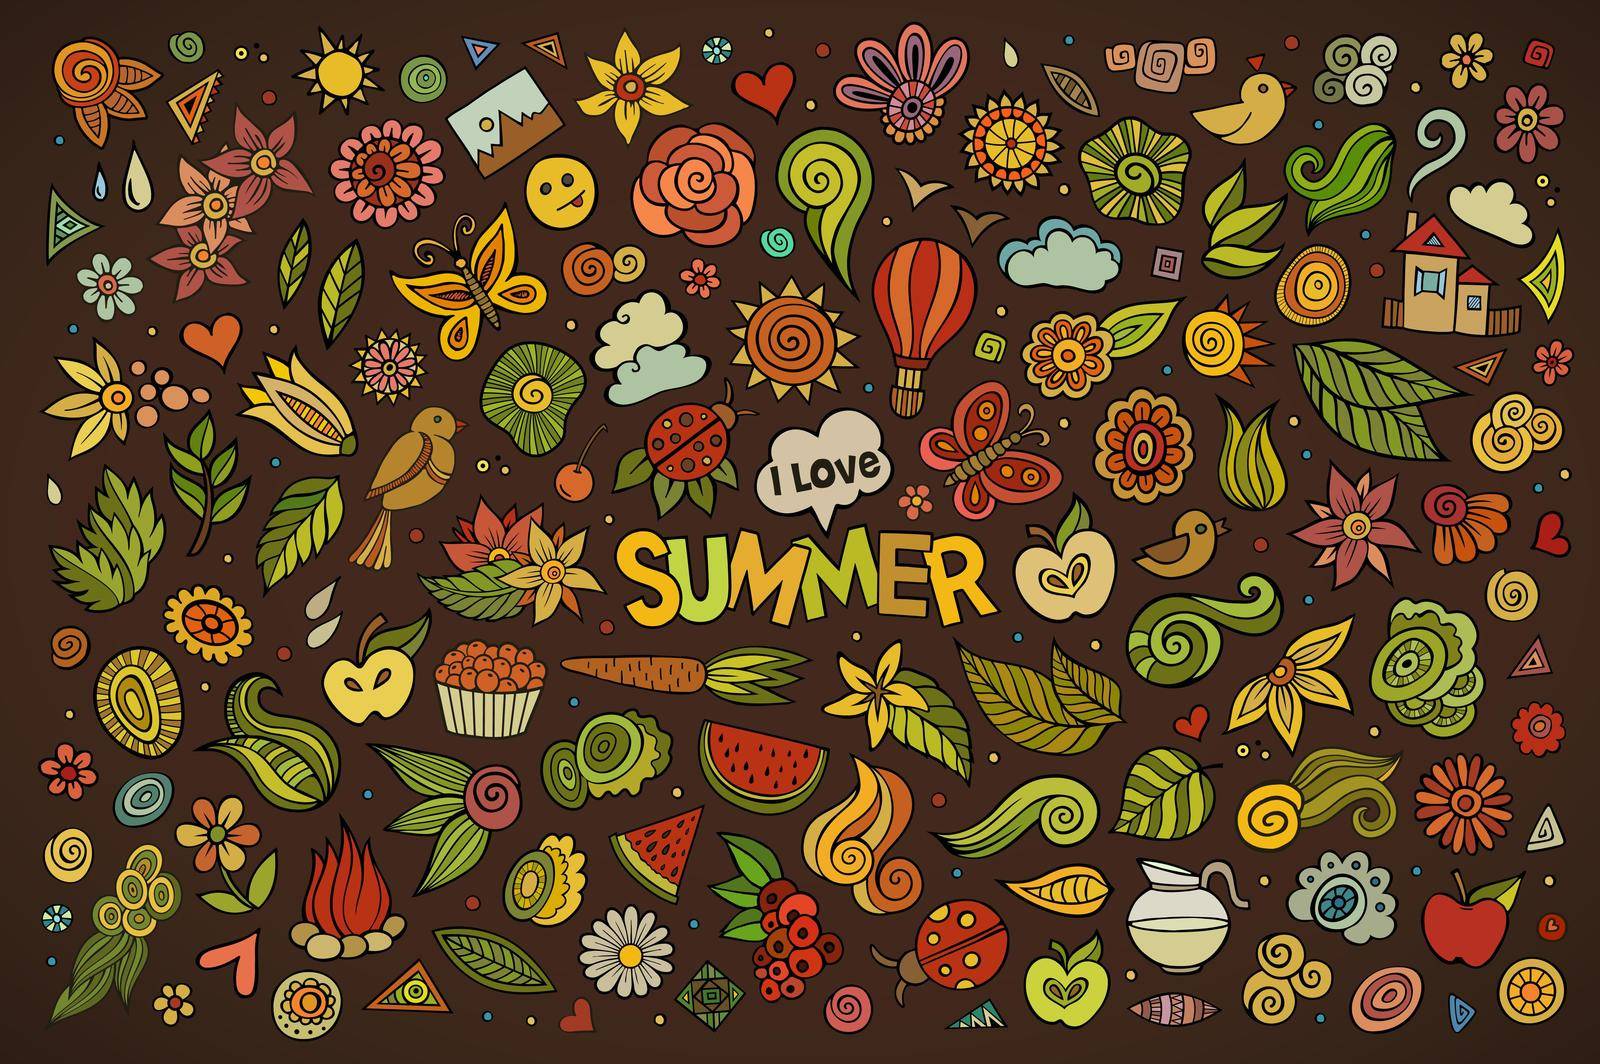 Summer nature symbols and objects by balabolka